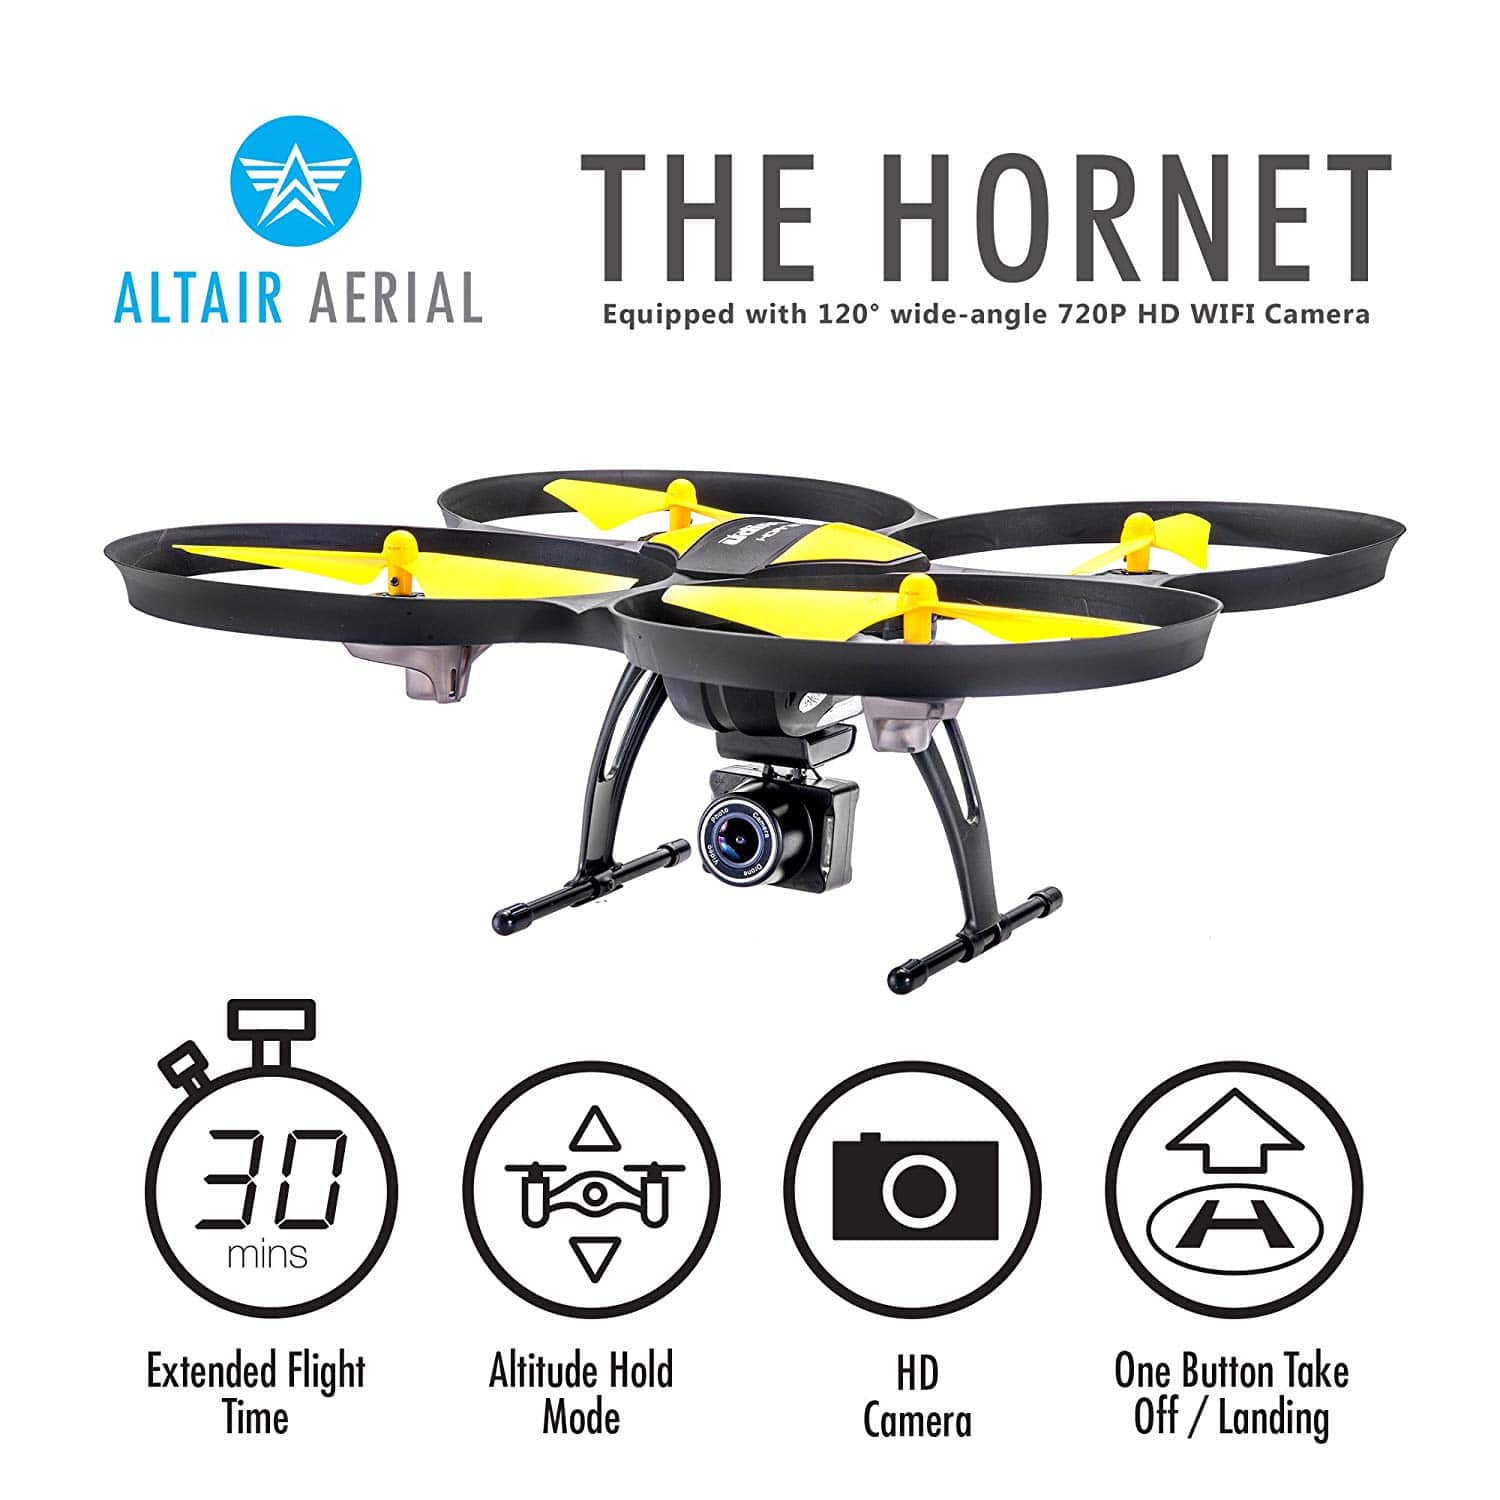 Altair 818 Hornet Drone, Altair 818 Hornet Drone review